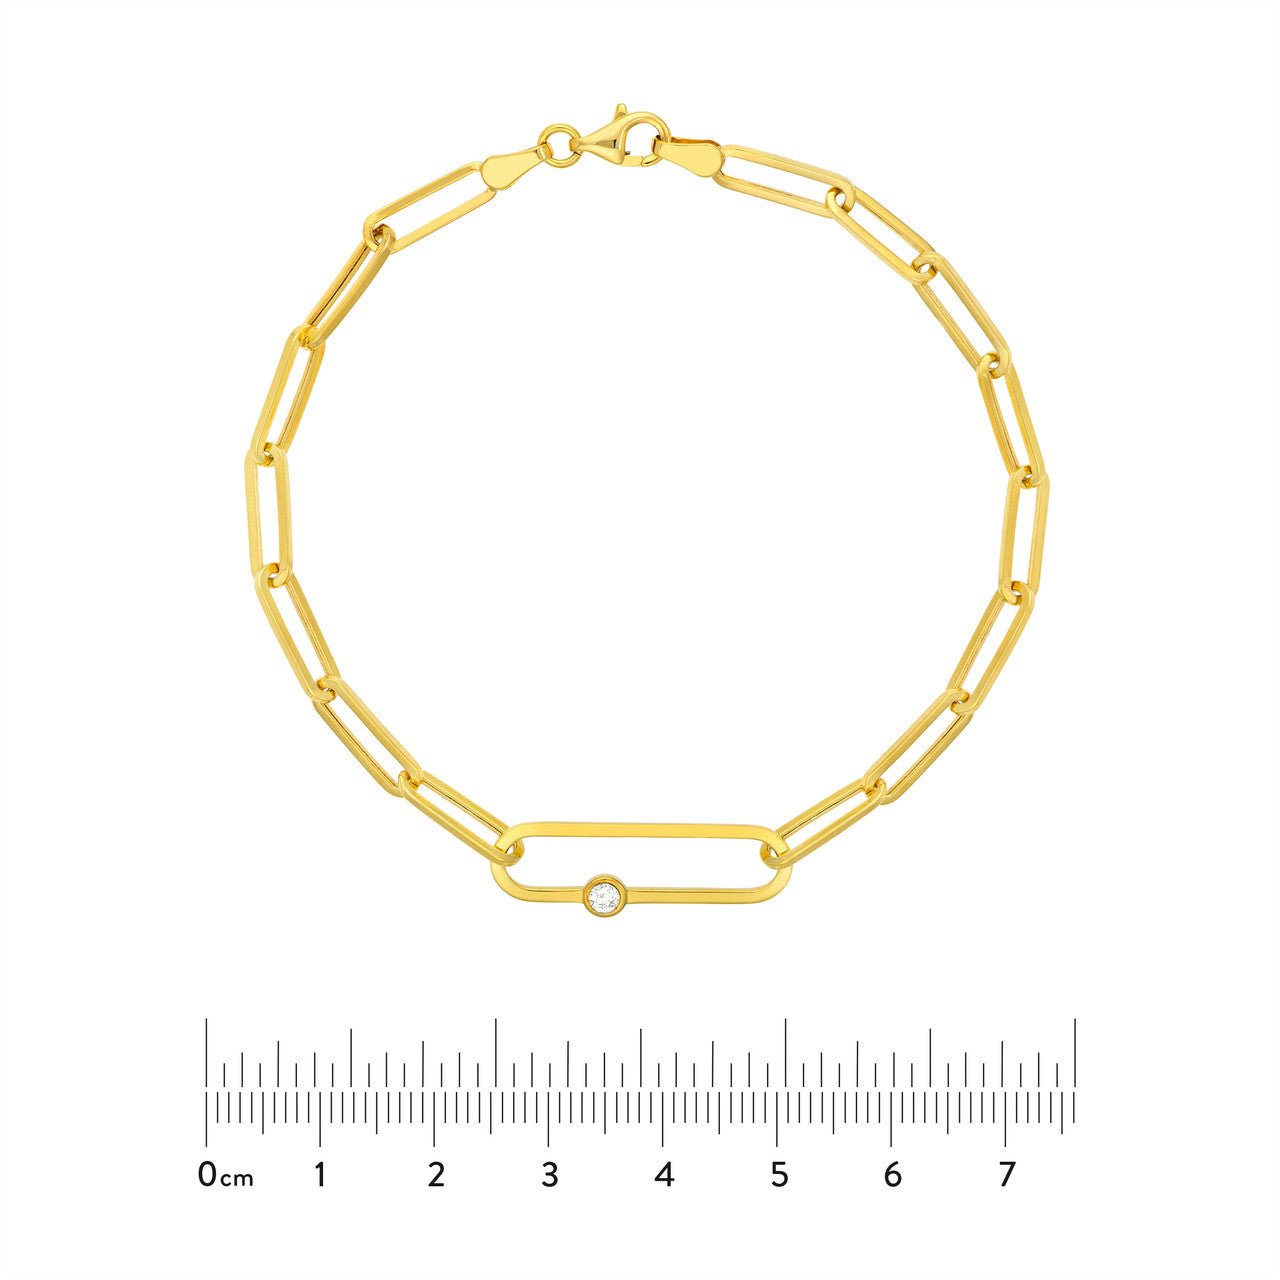 14kt yellow gold/measurement